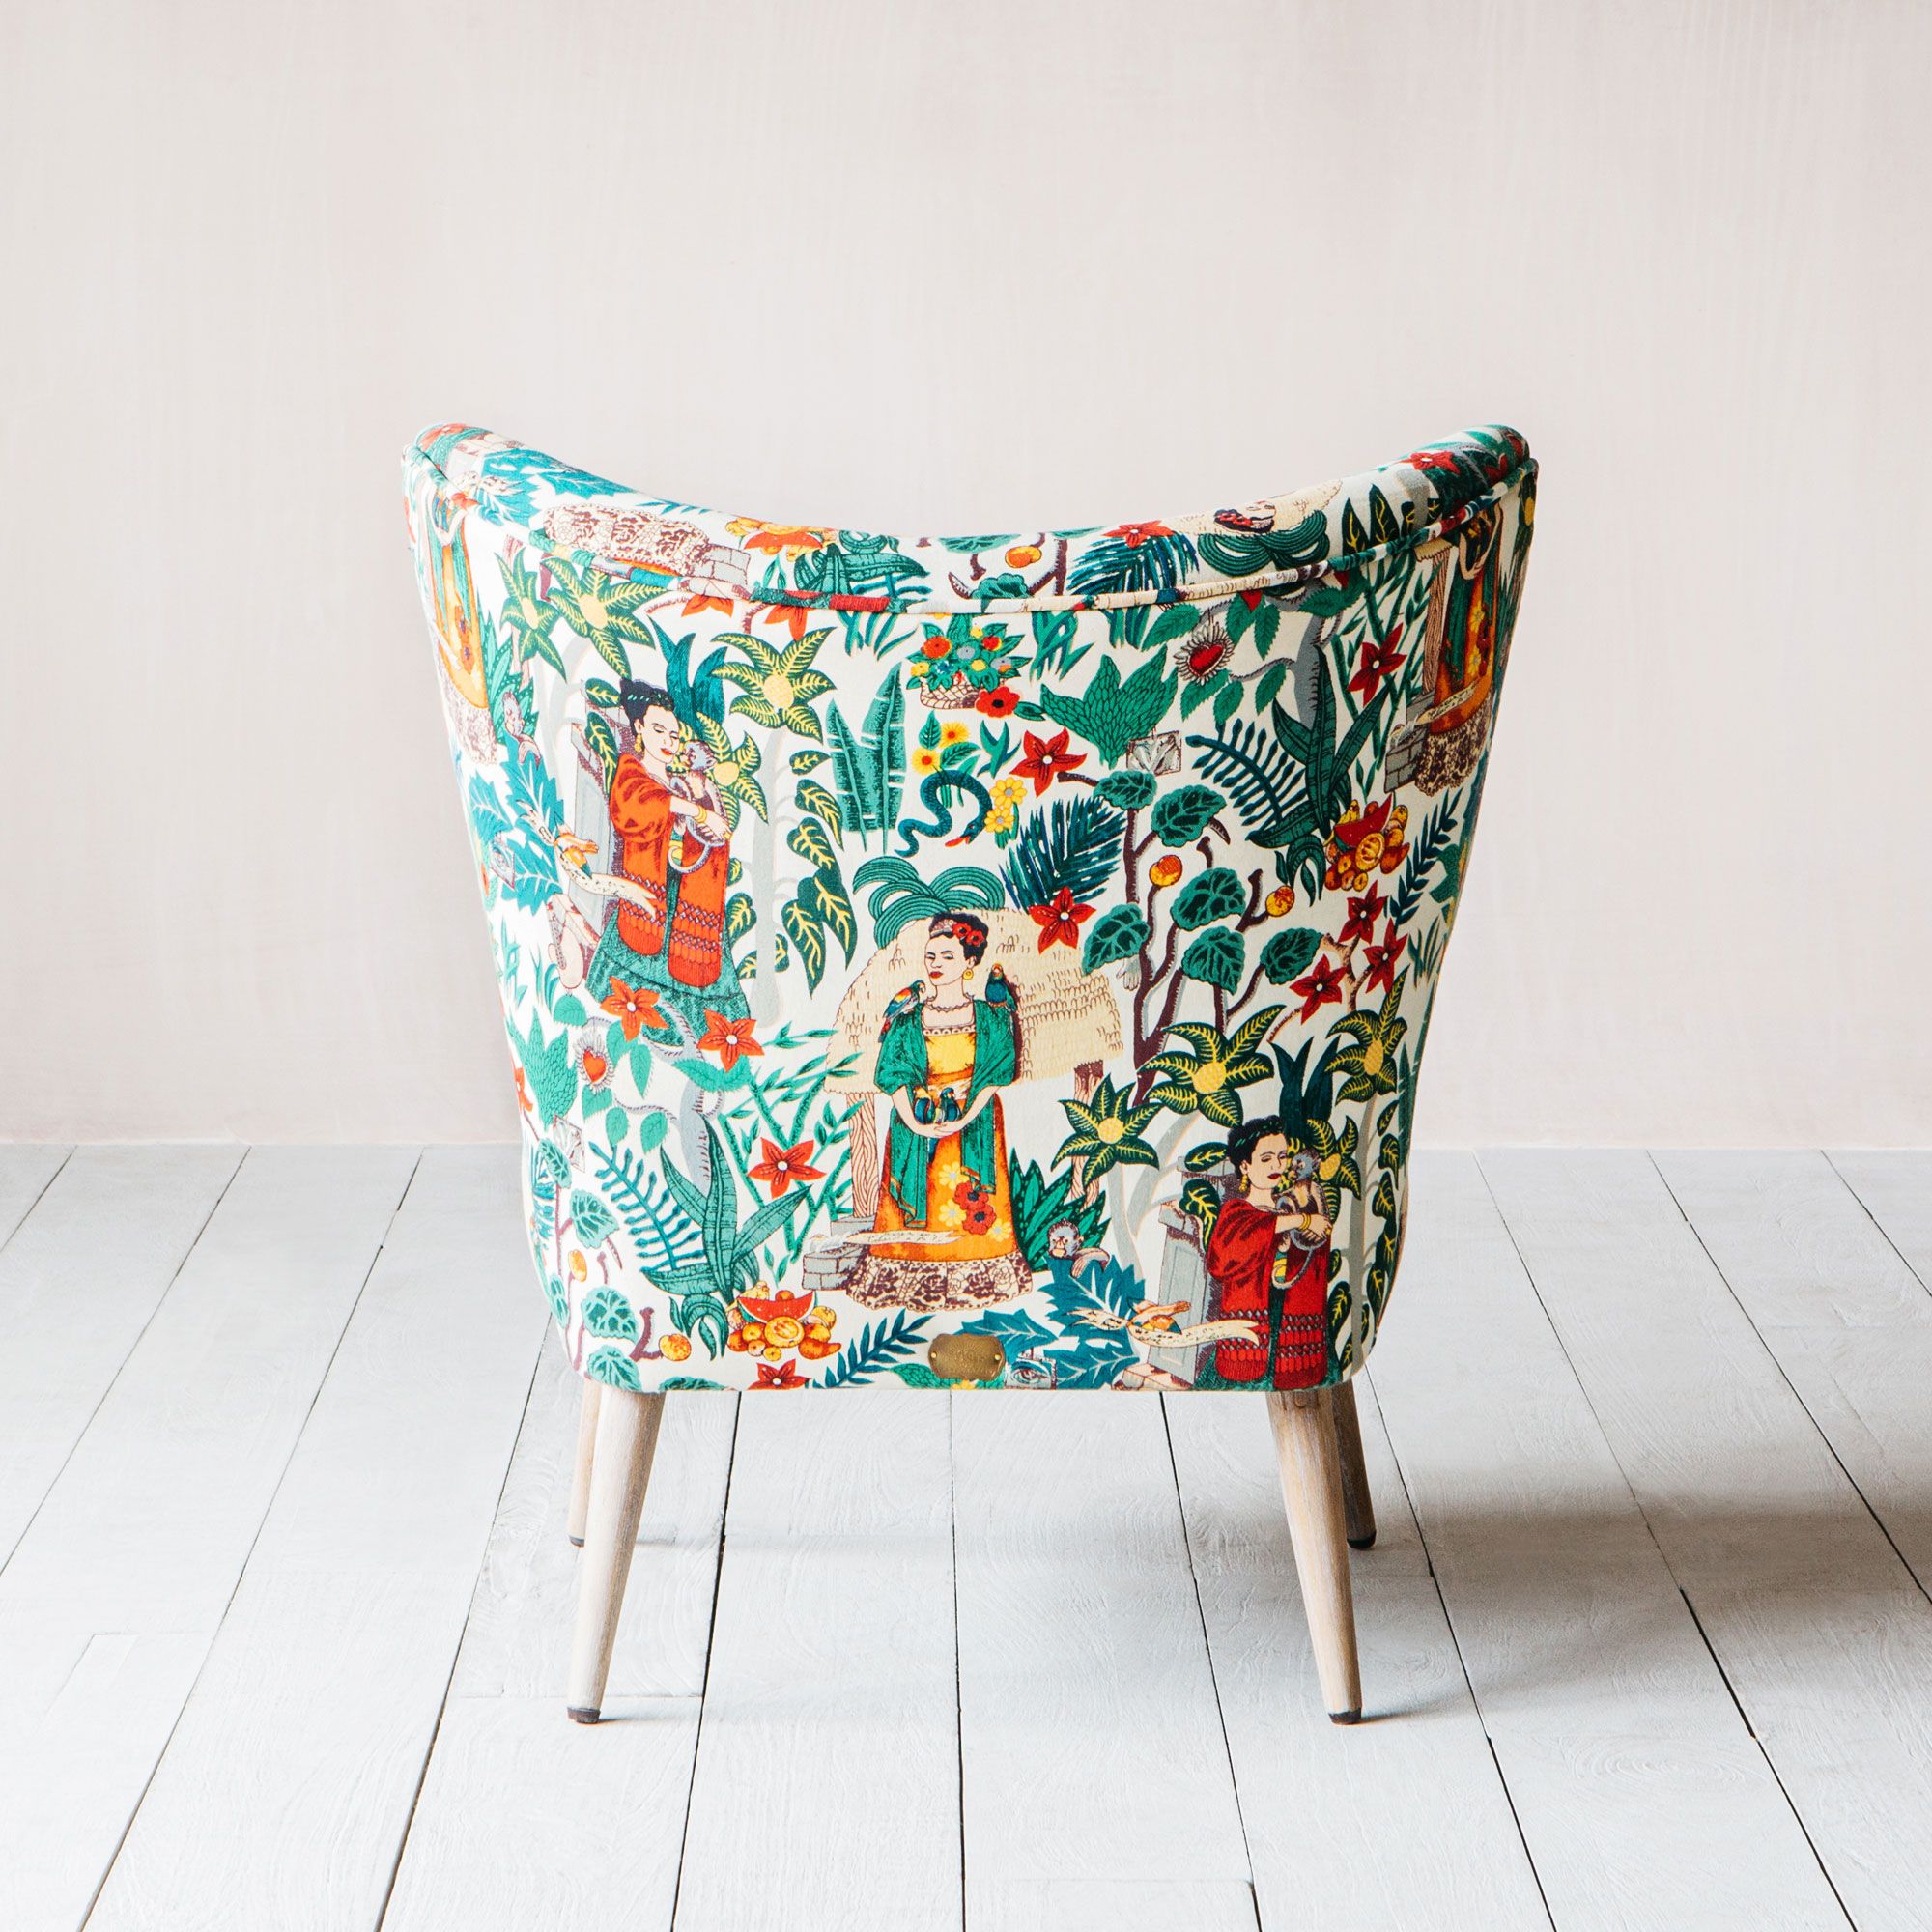 Alpana Mexicana Colorful Print Teak Chair